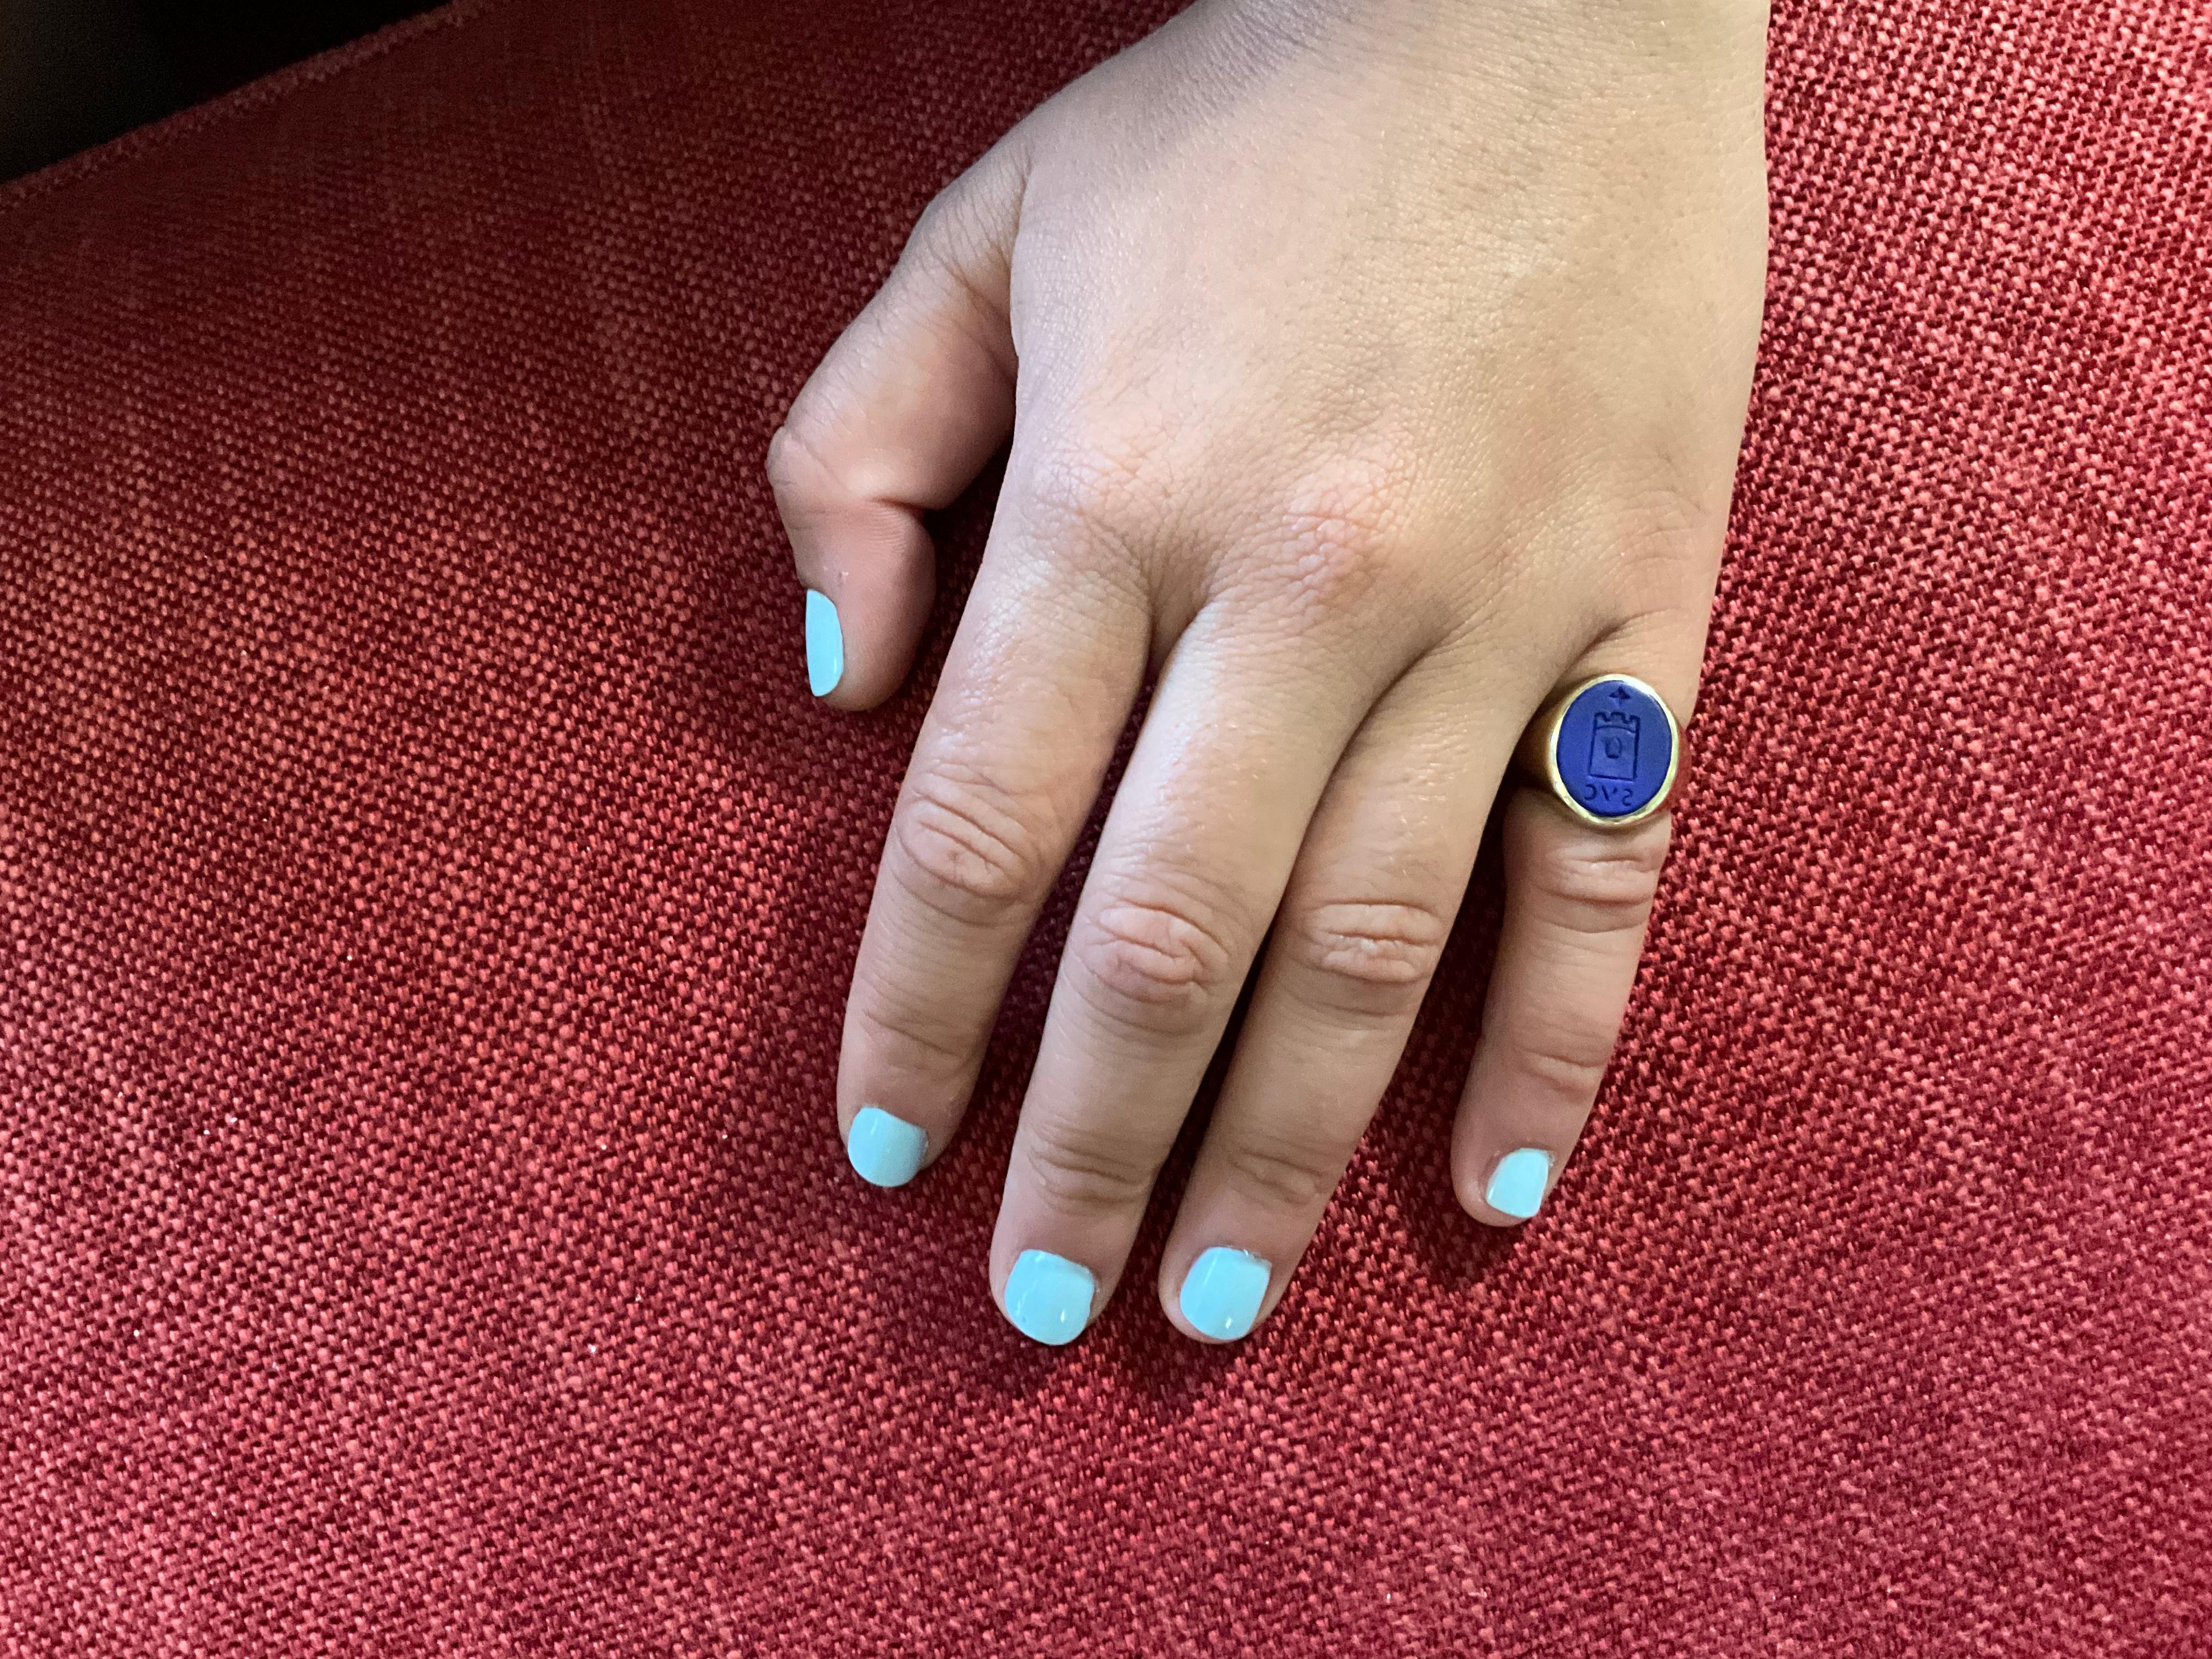 Twentieth Century  Lapis Lazuli Signet Ring engraved 